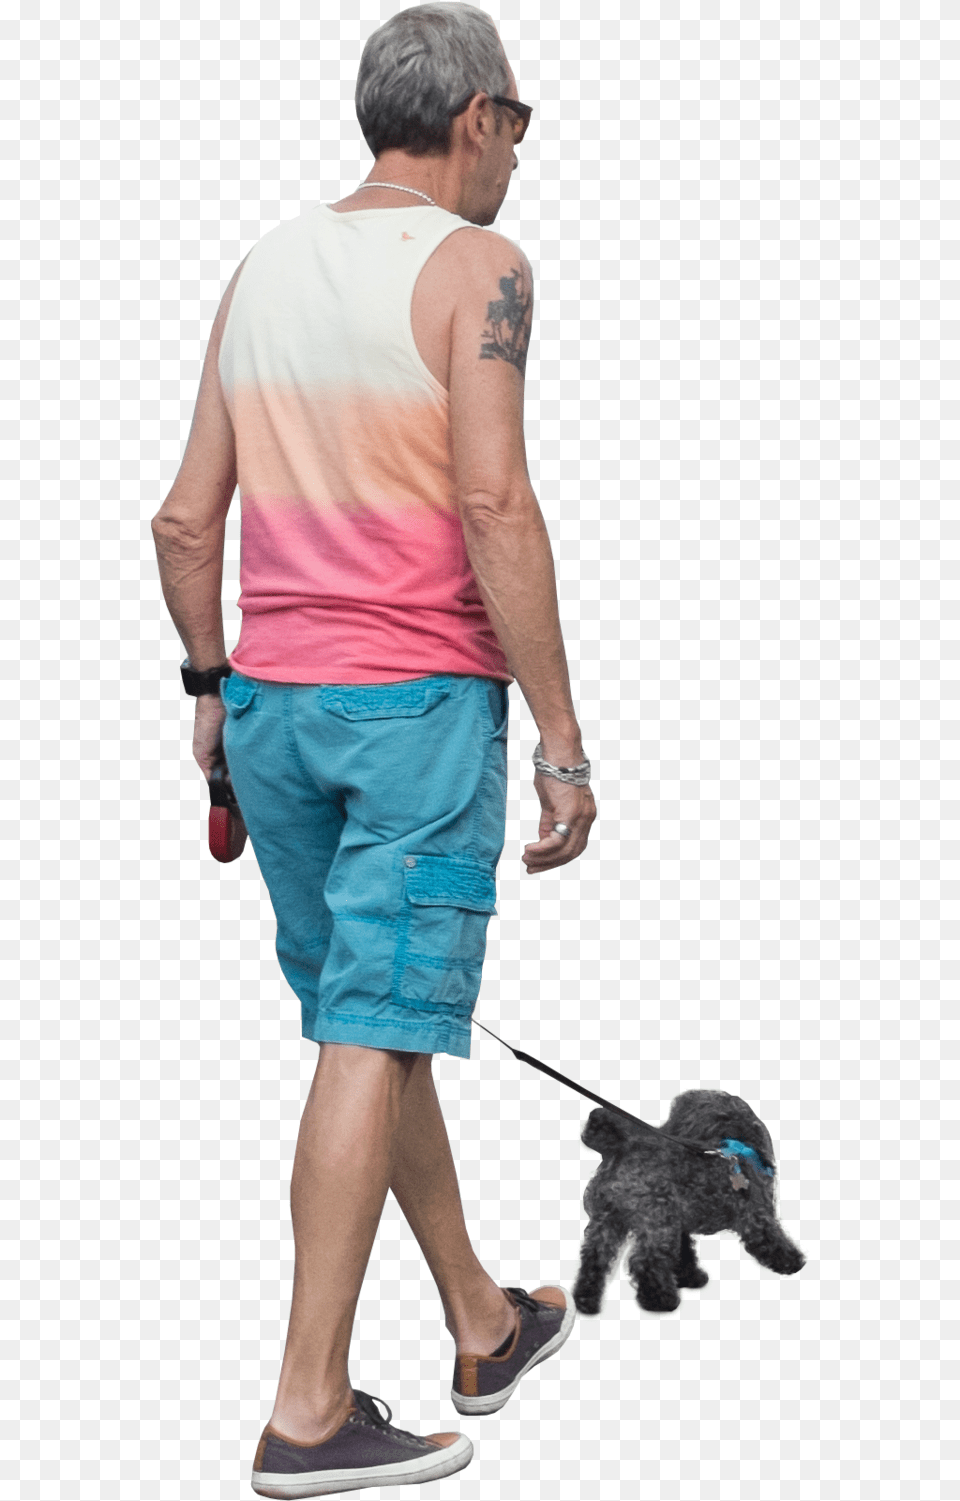 People Dog Walking Image With No Man Walking Dog, Clothing, Back, Body Part, Person Free Png Download